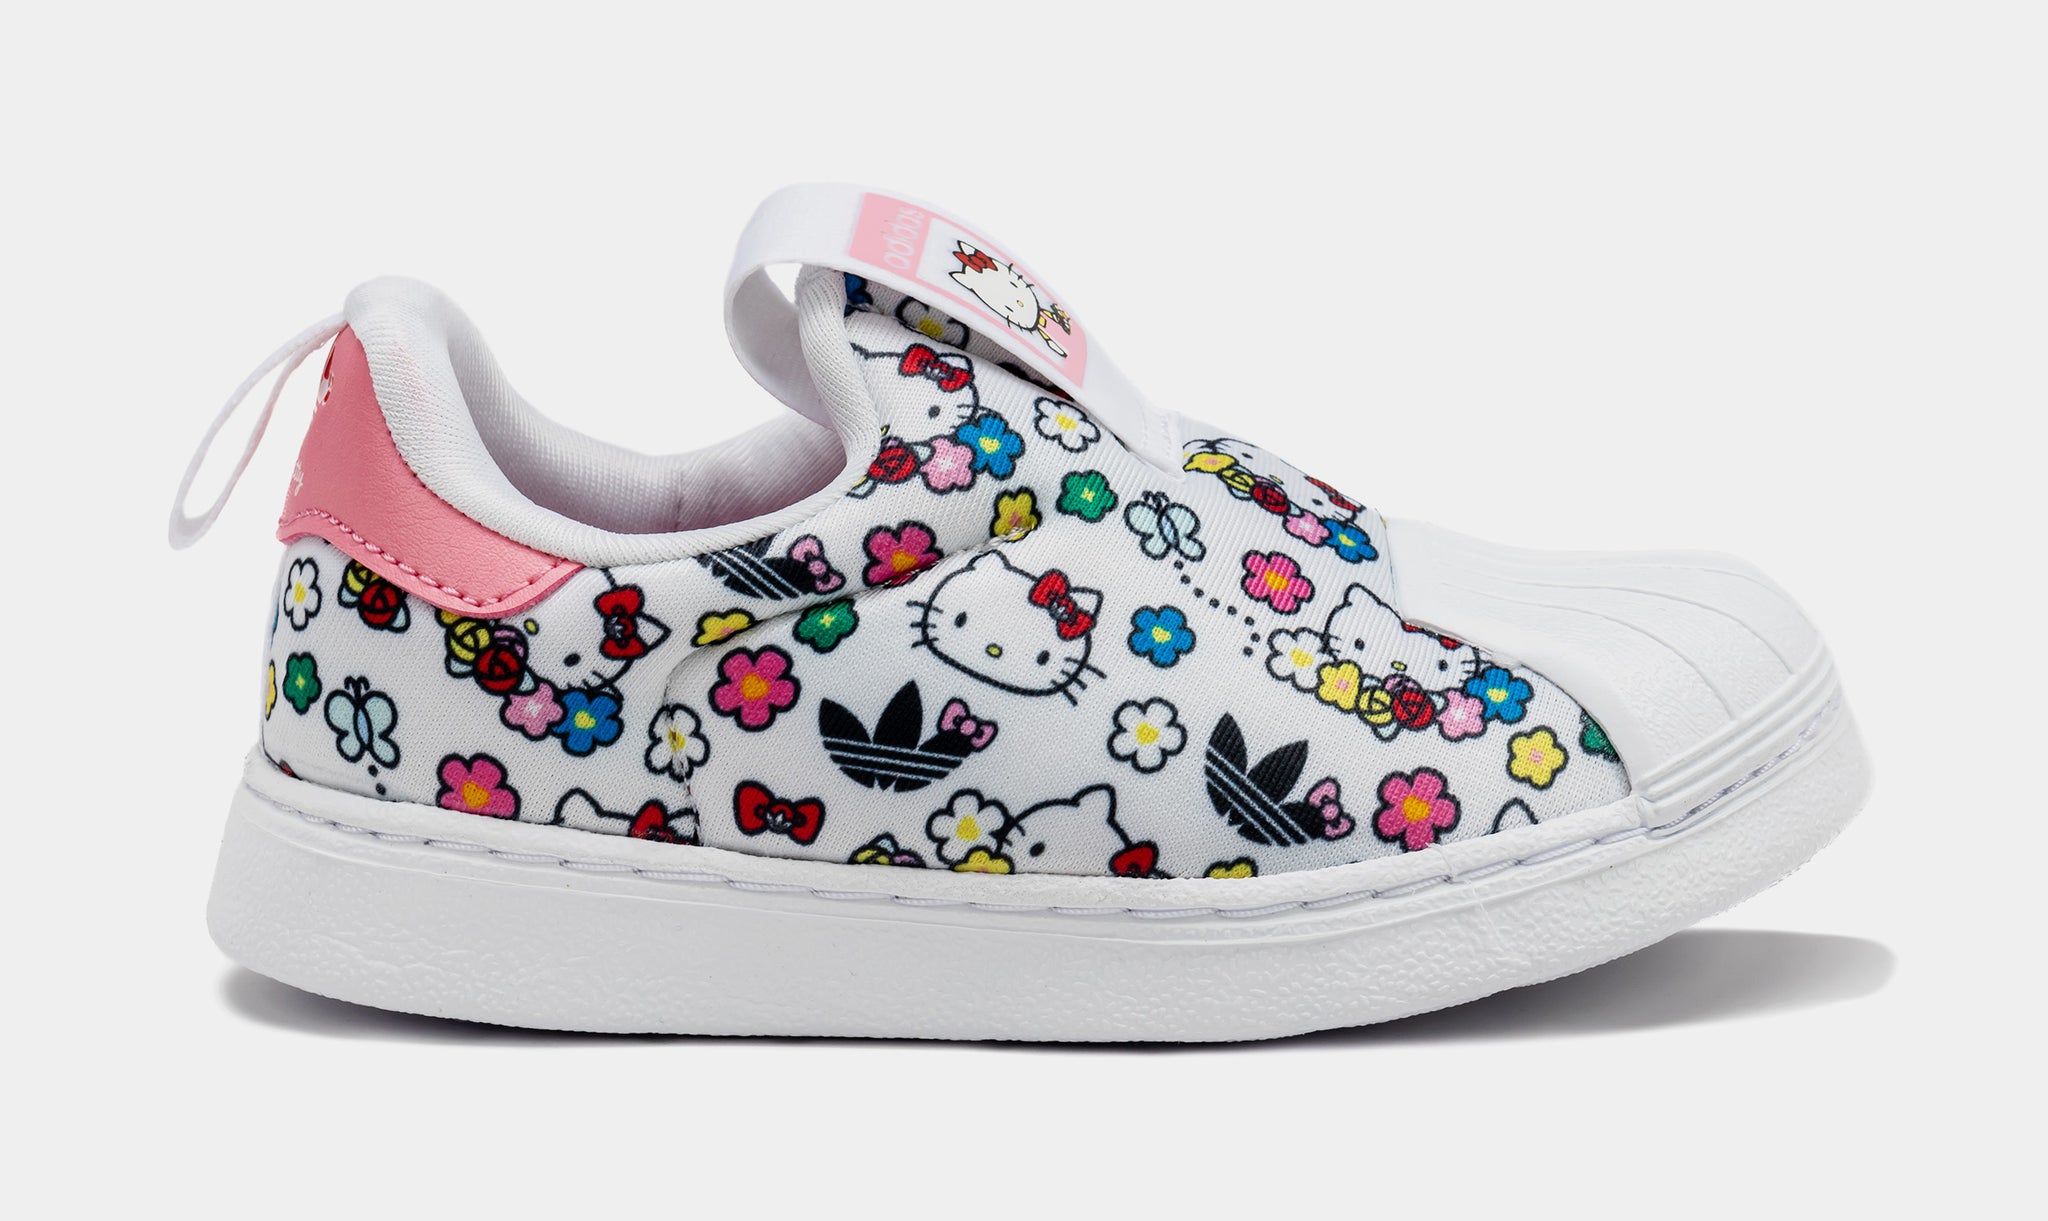 Kids Shoes - adidas Originals x Hello Kitty Superstar Shoes Kids - White